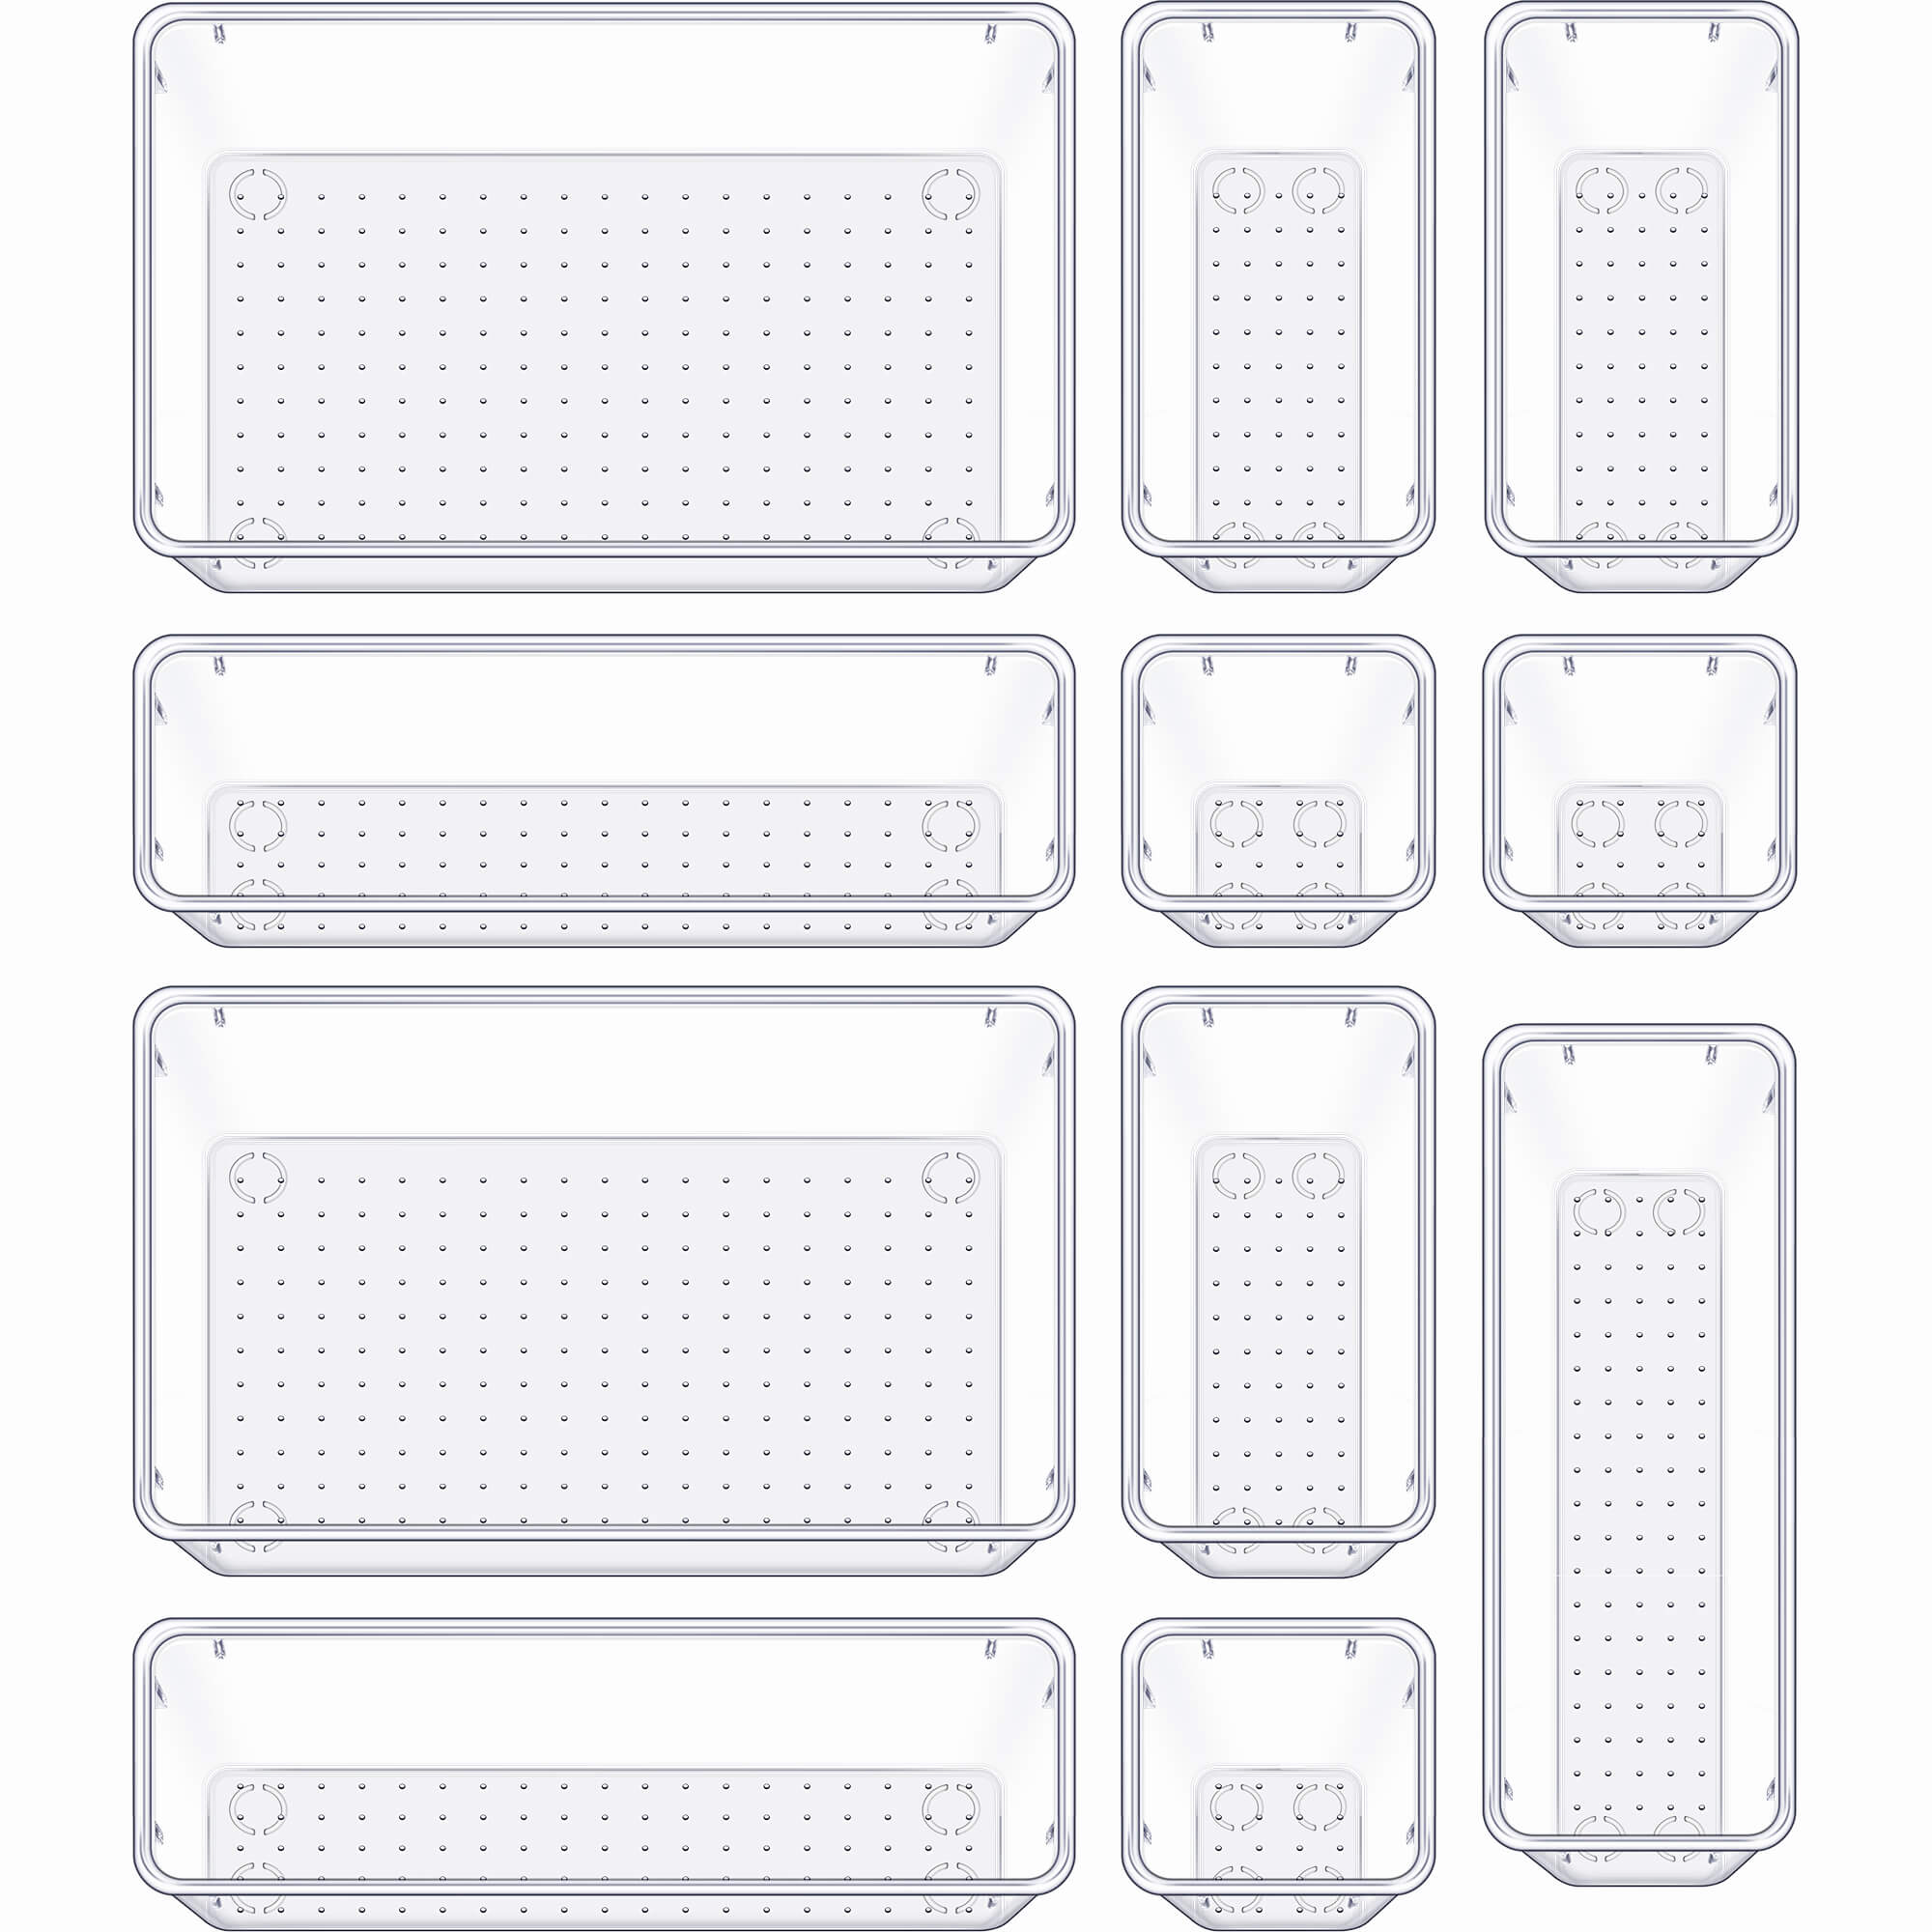 Kootek 11 pcs Clear Plastic Drawer Organizer Set, 4-Size Bathroom Draw